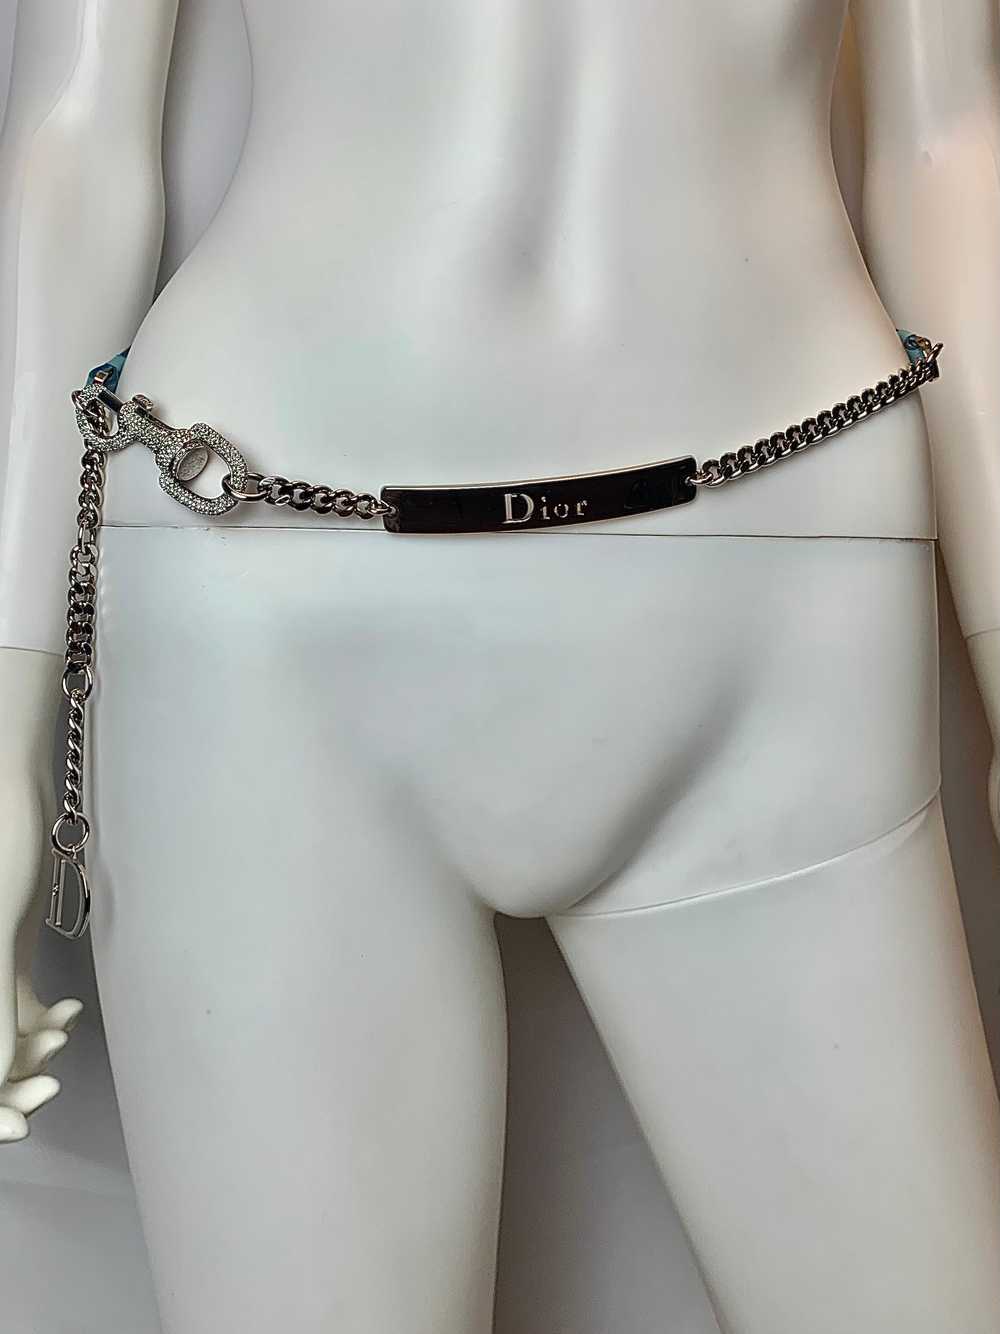 Dior by John Galliano SS 2003 Belt - image 3